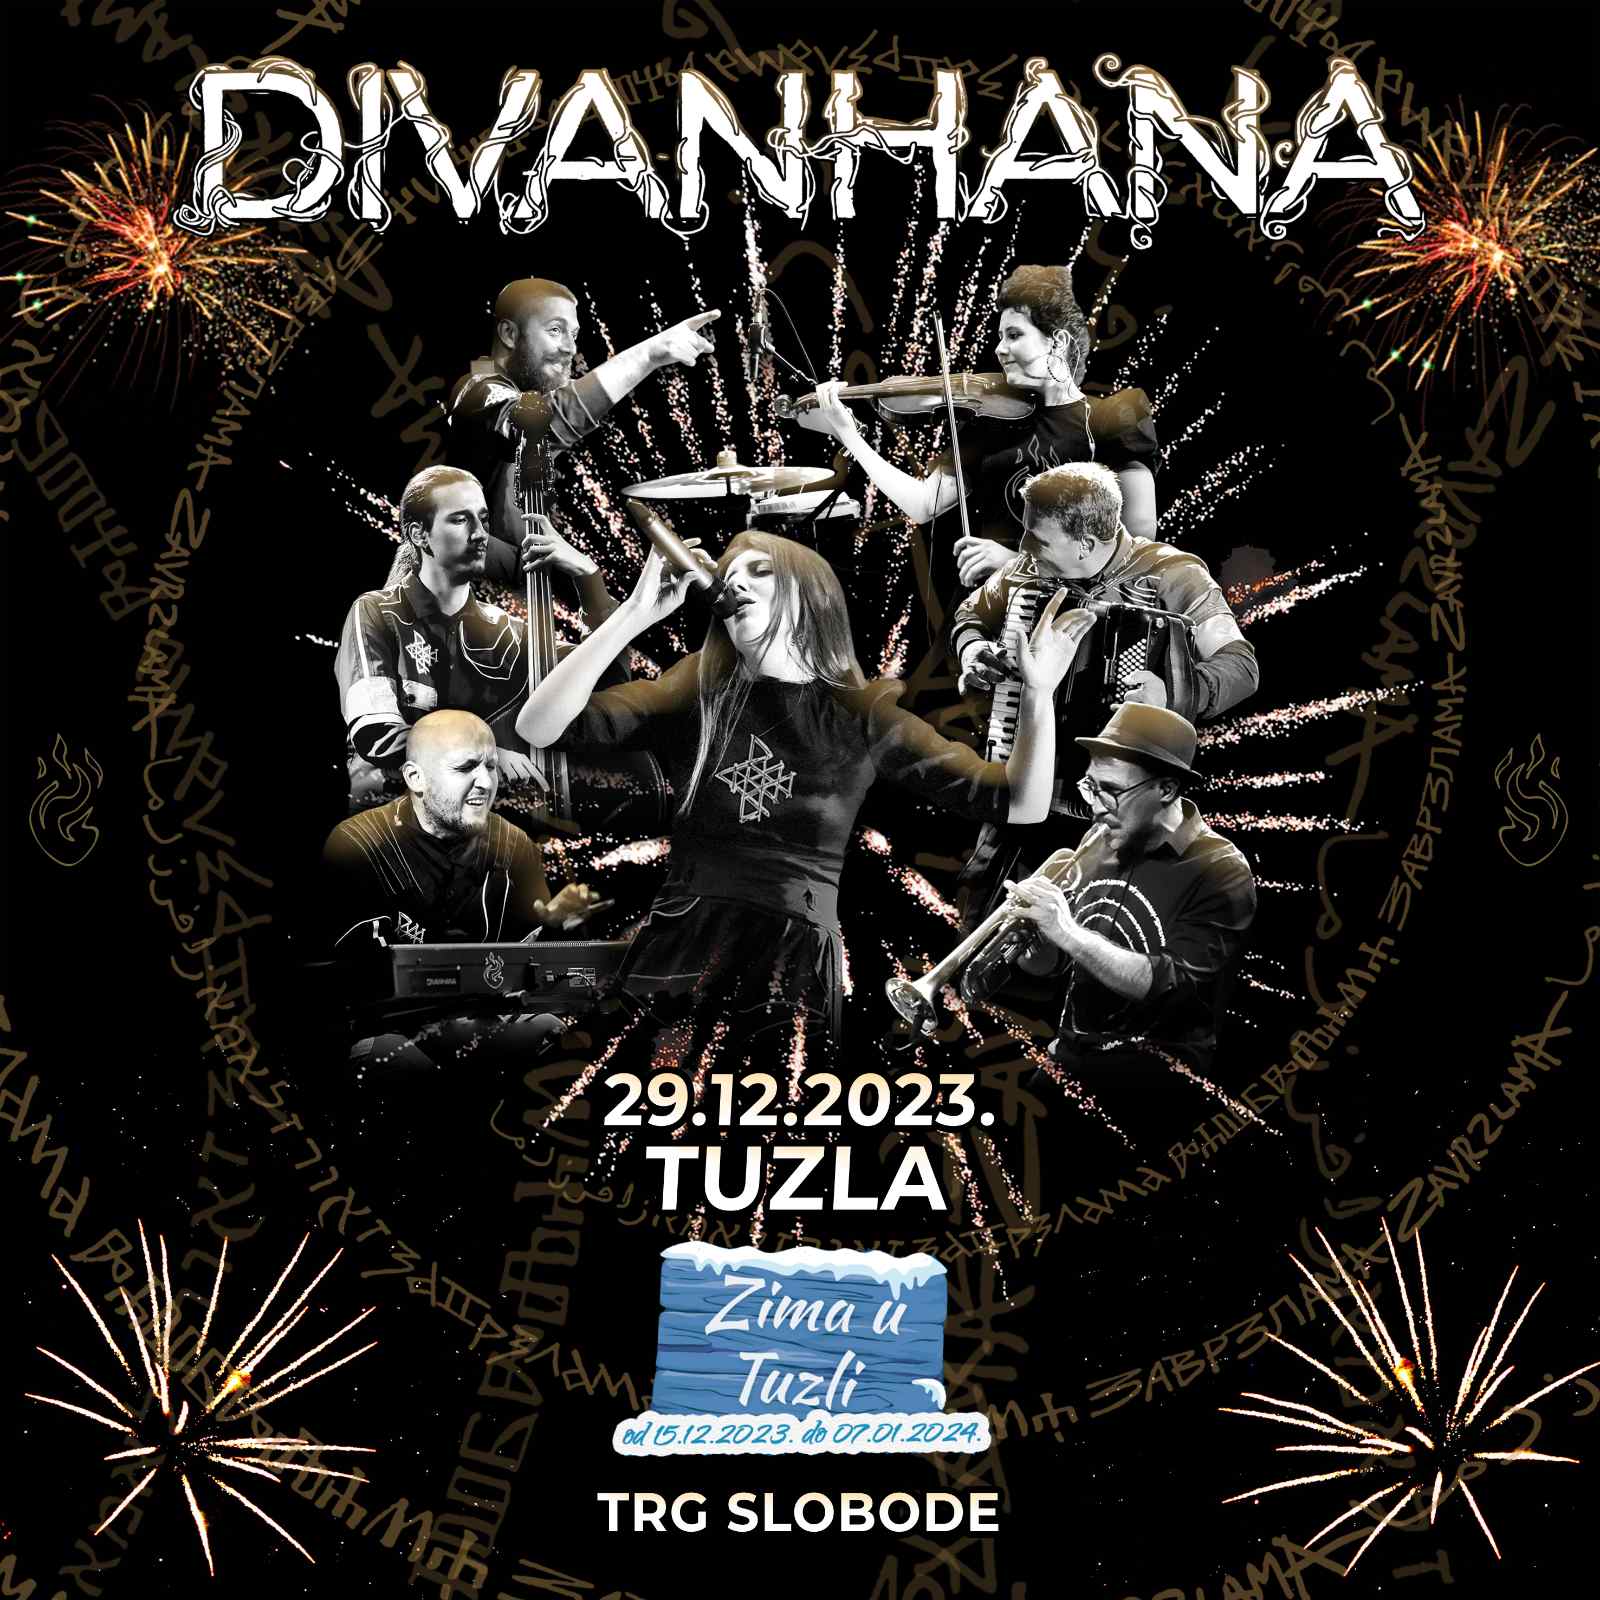 Popularni sevdah sastav Divanhana večeras nastupa na Trgu slobode u Tuzli